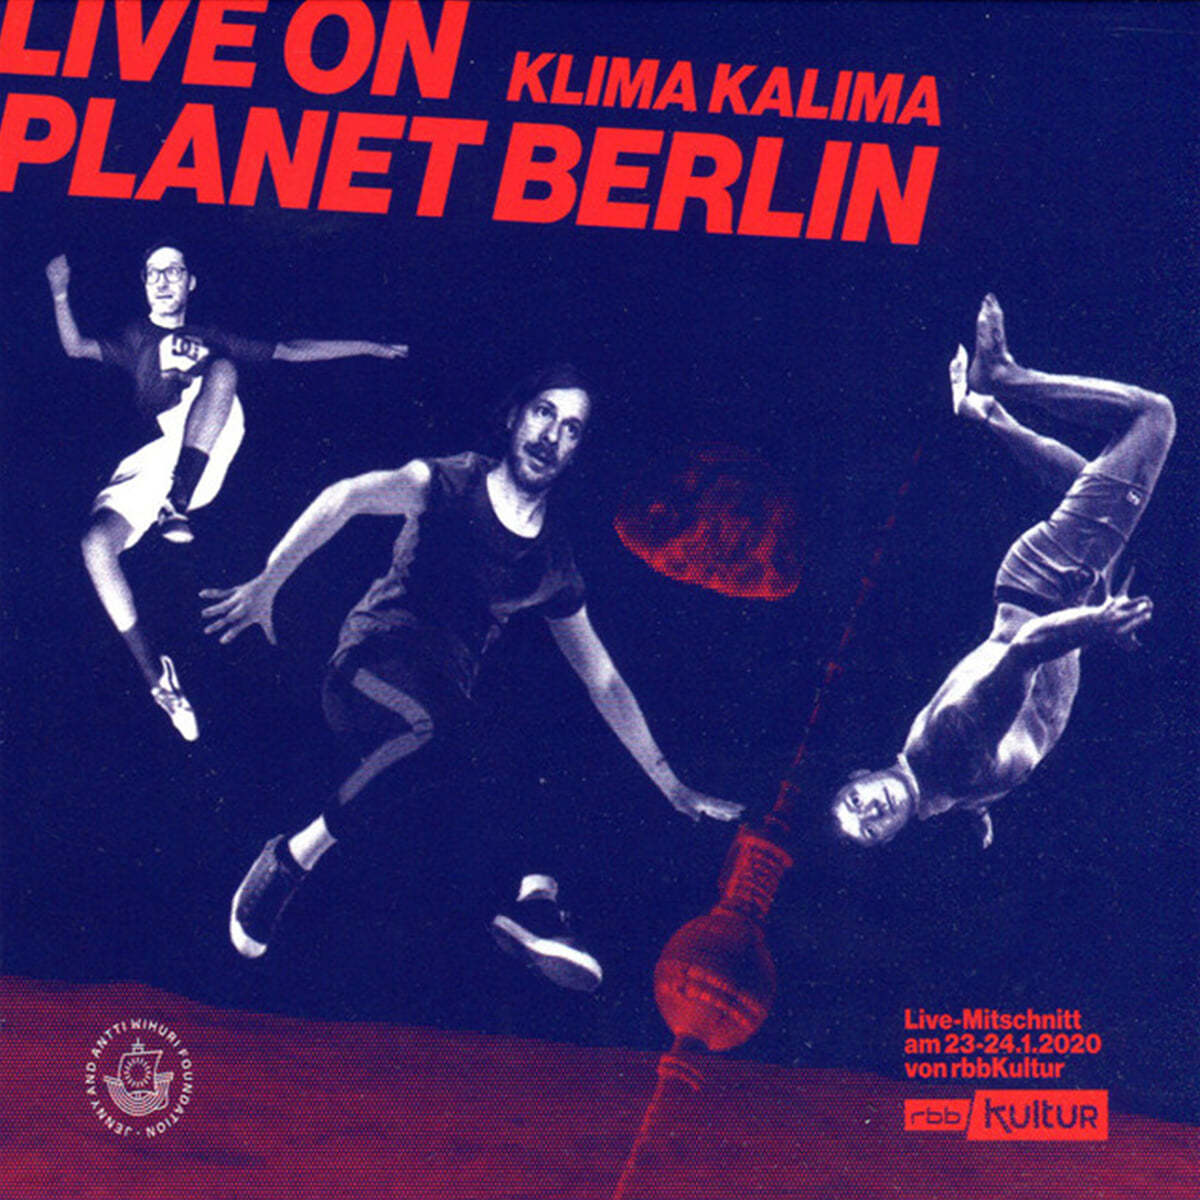 Klima Kalima (클리마 칼리마) - Live On Planet Berlin